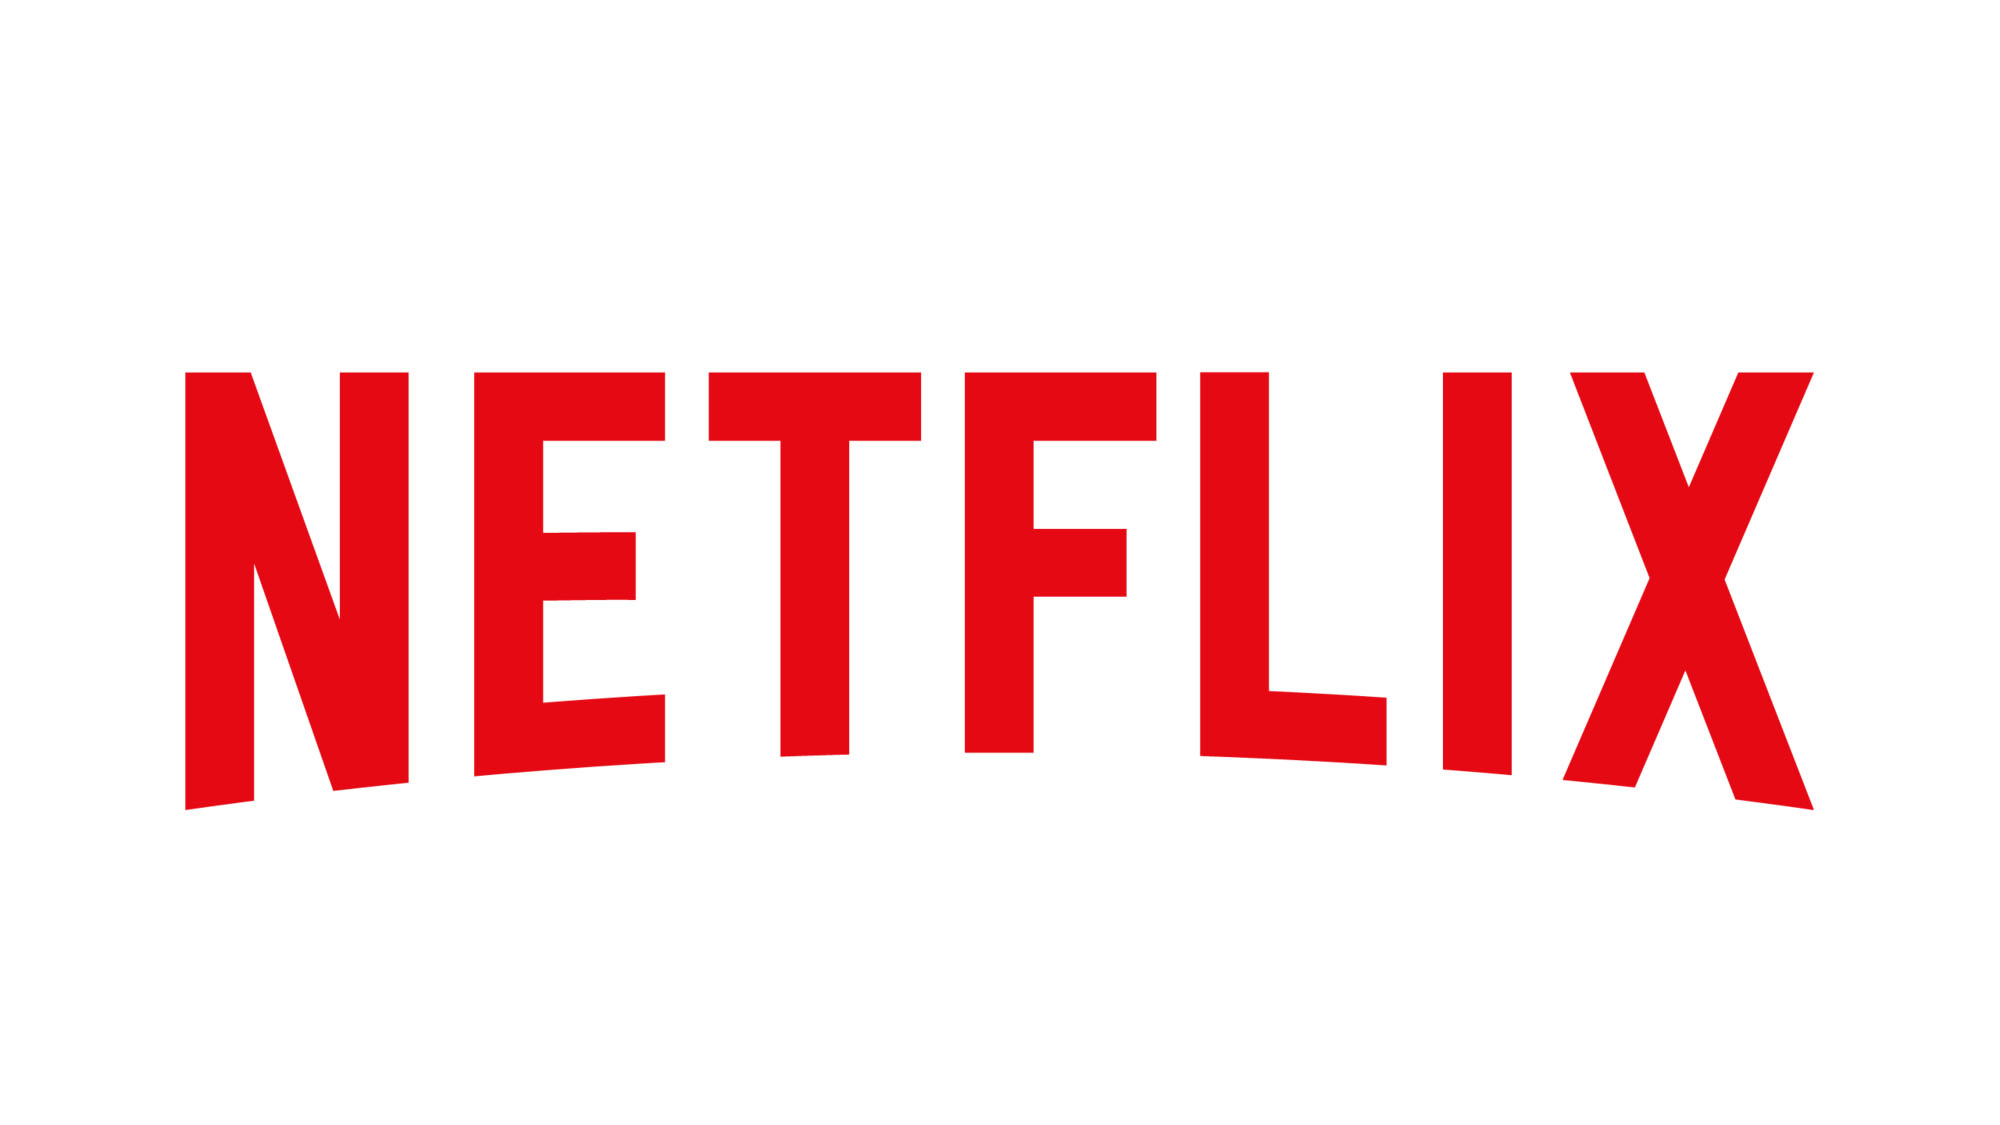 Netflix nos traerá la serie española ‘Élite’